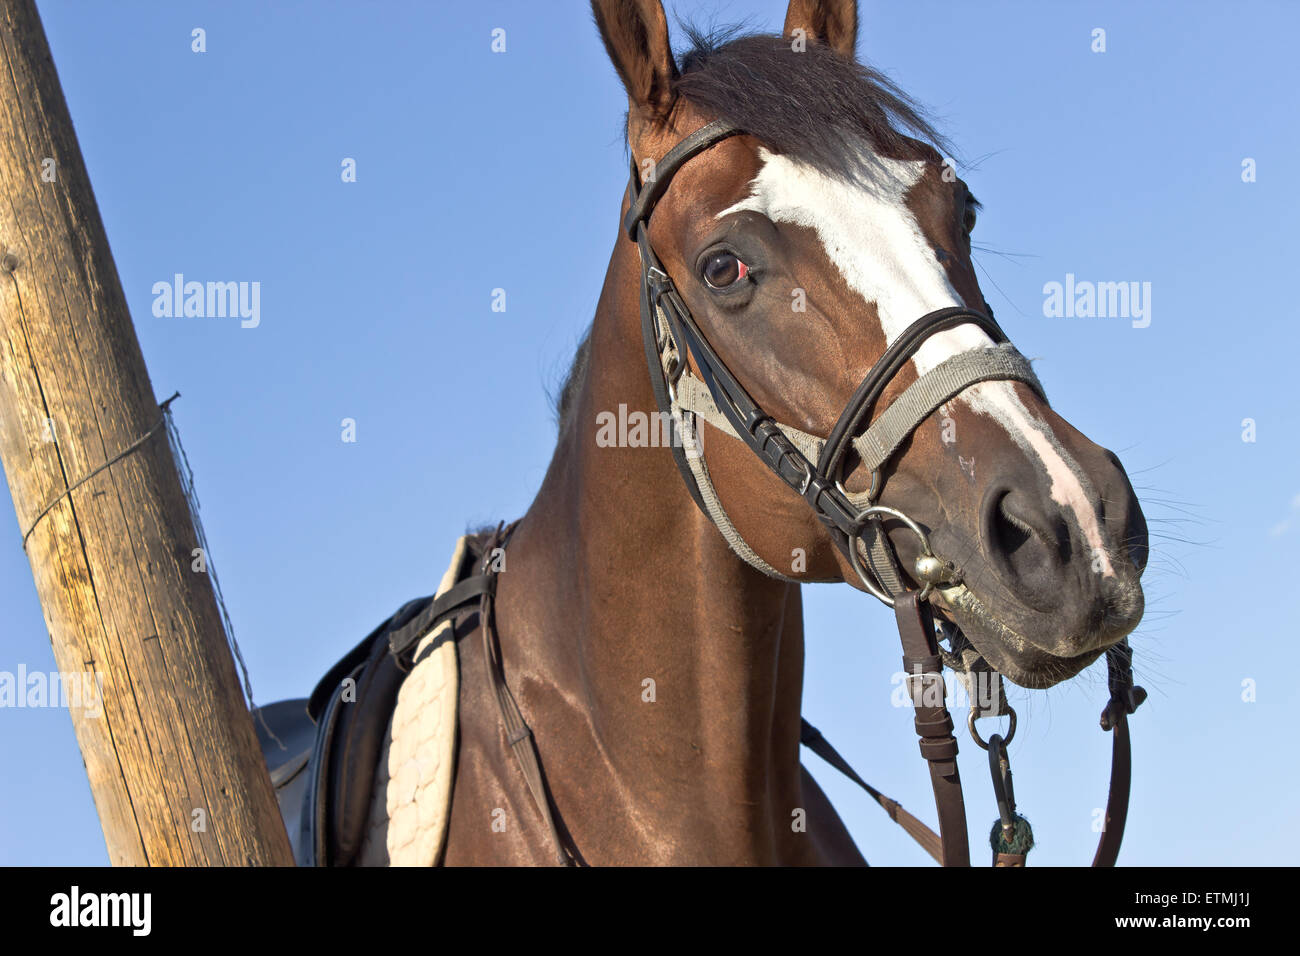 Horse head near wooden post over blue sky Stock Photo